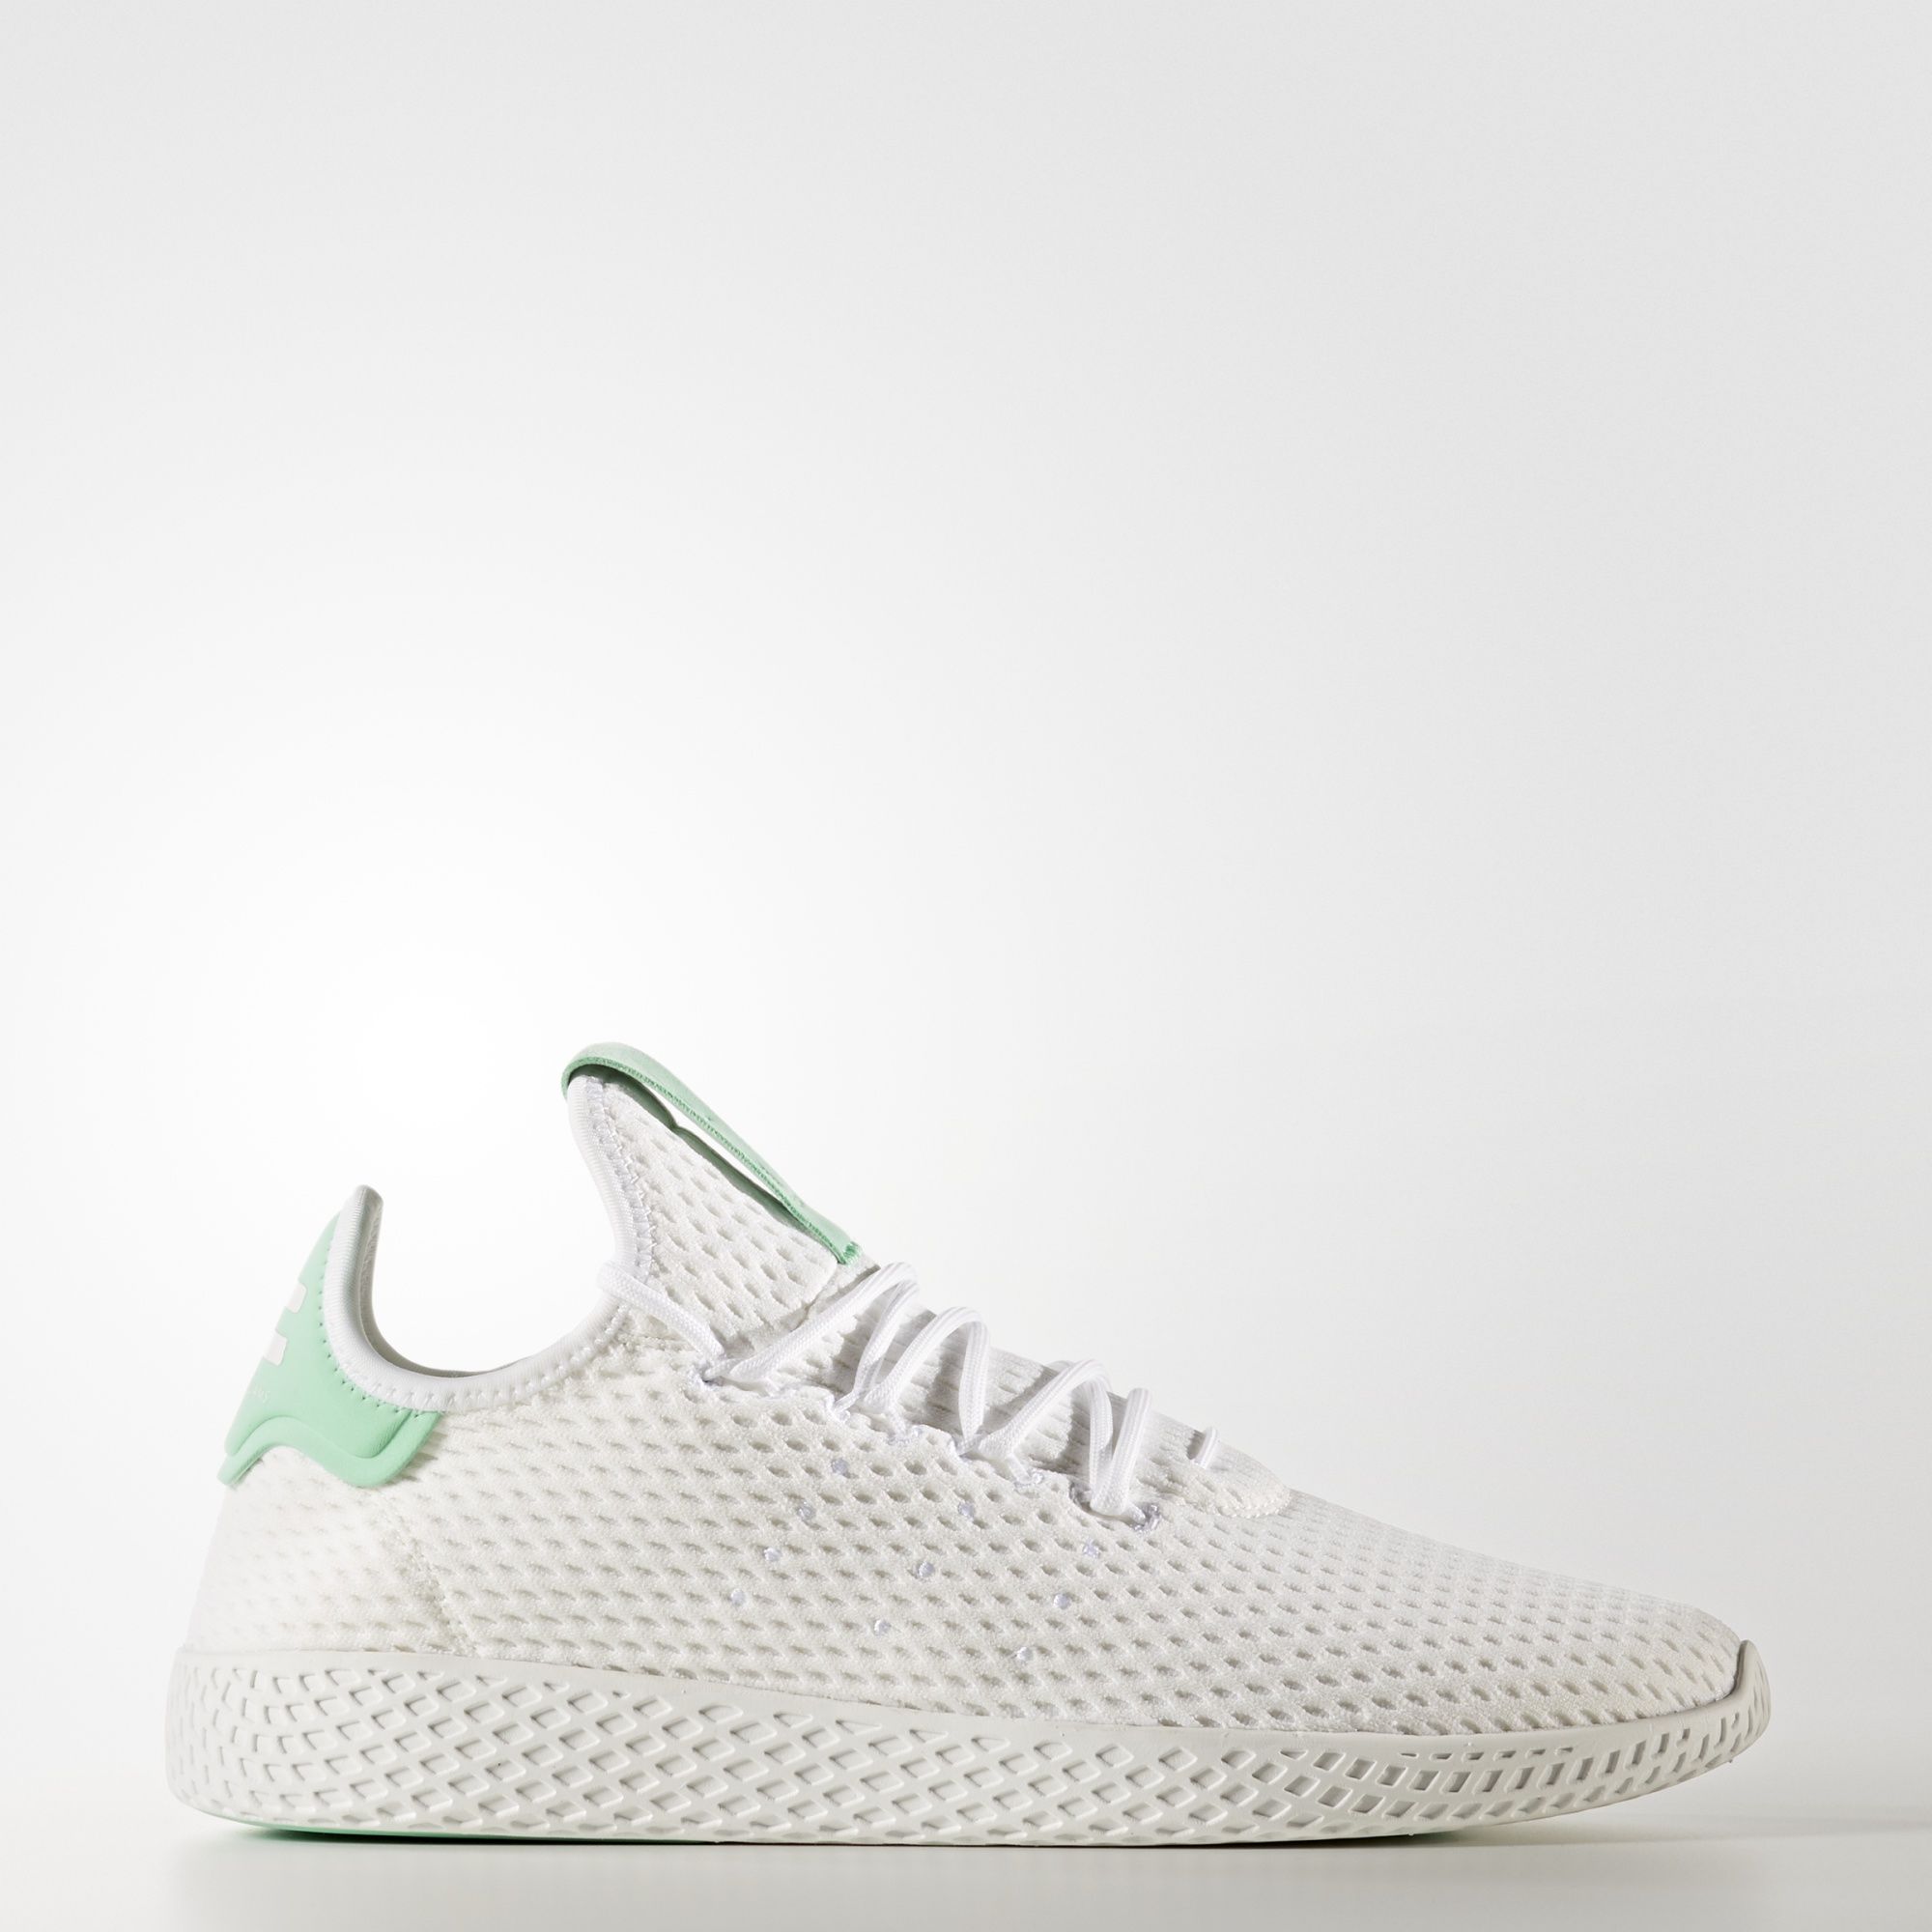 adidas-pharrell-williams-tennis-hu-white-green-glow-2